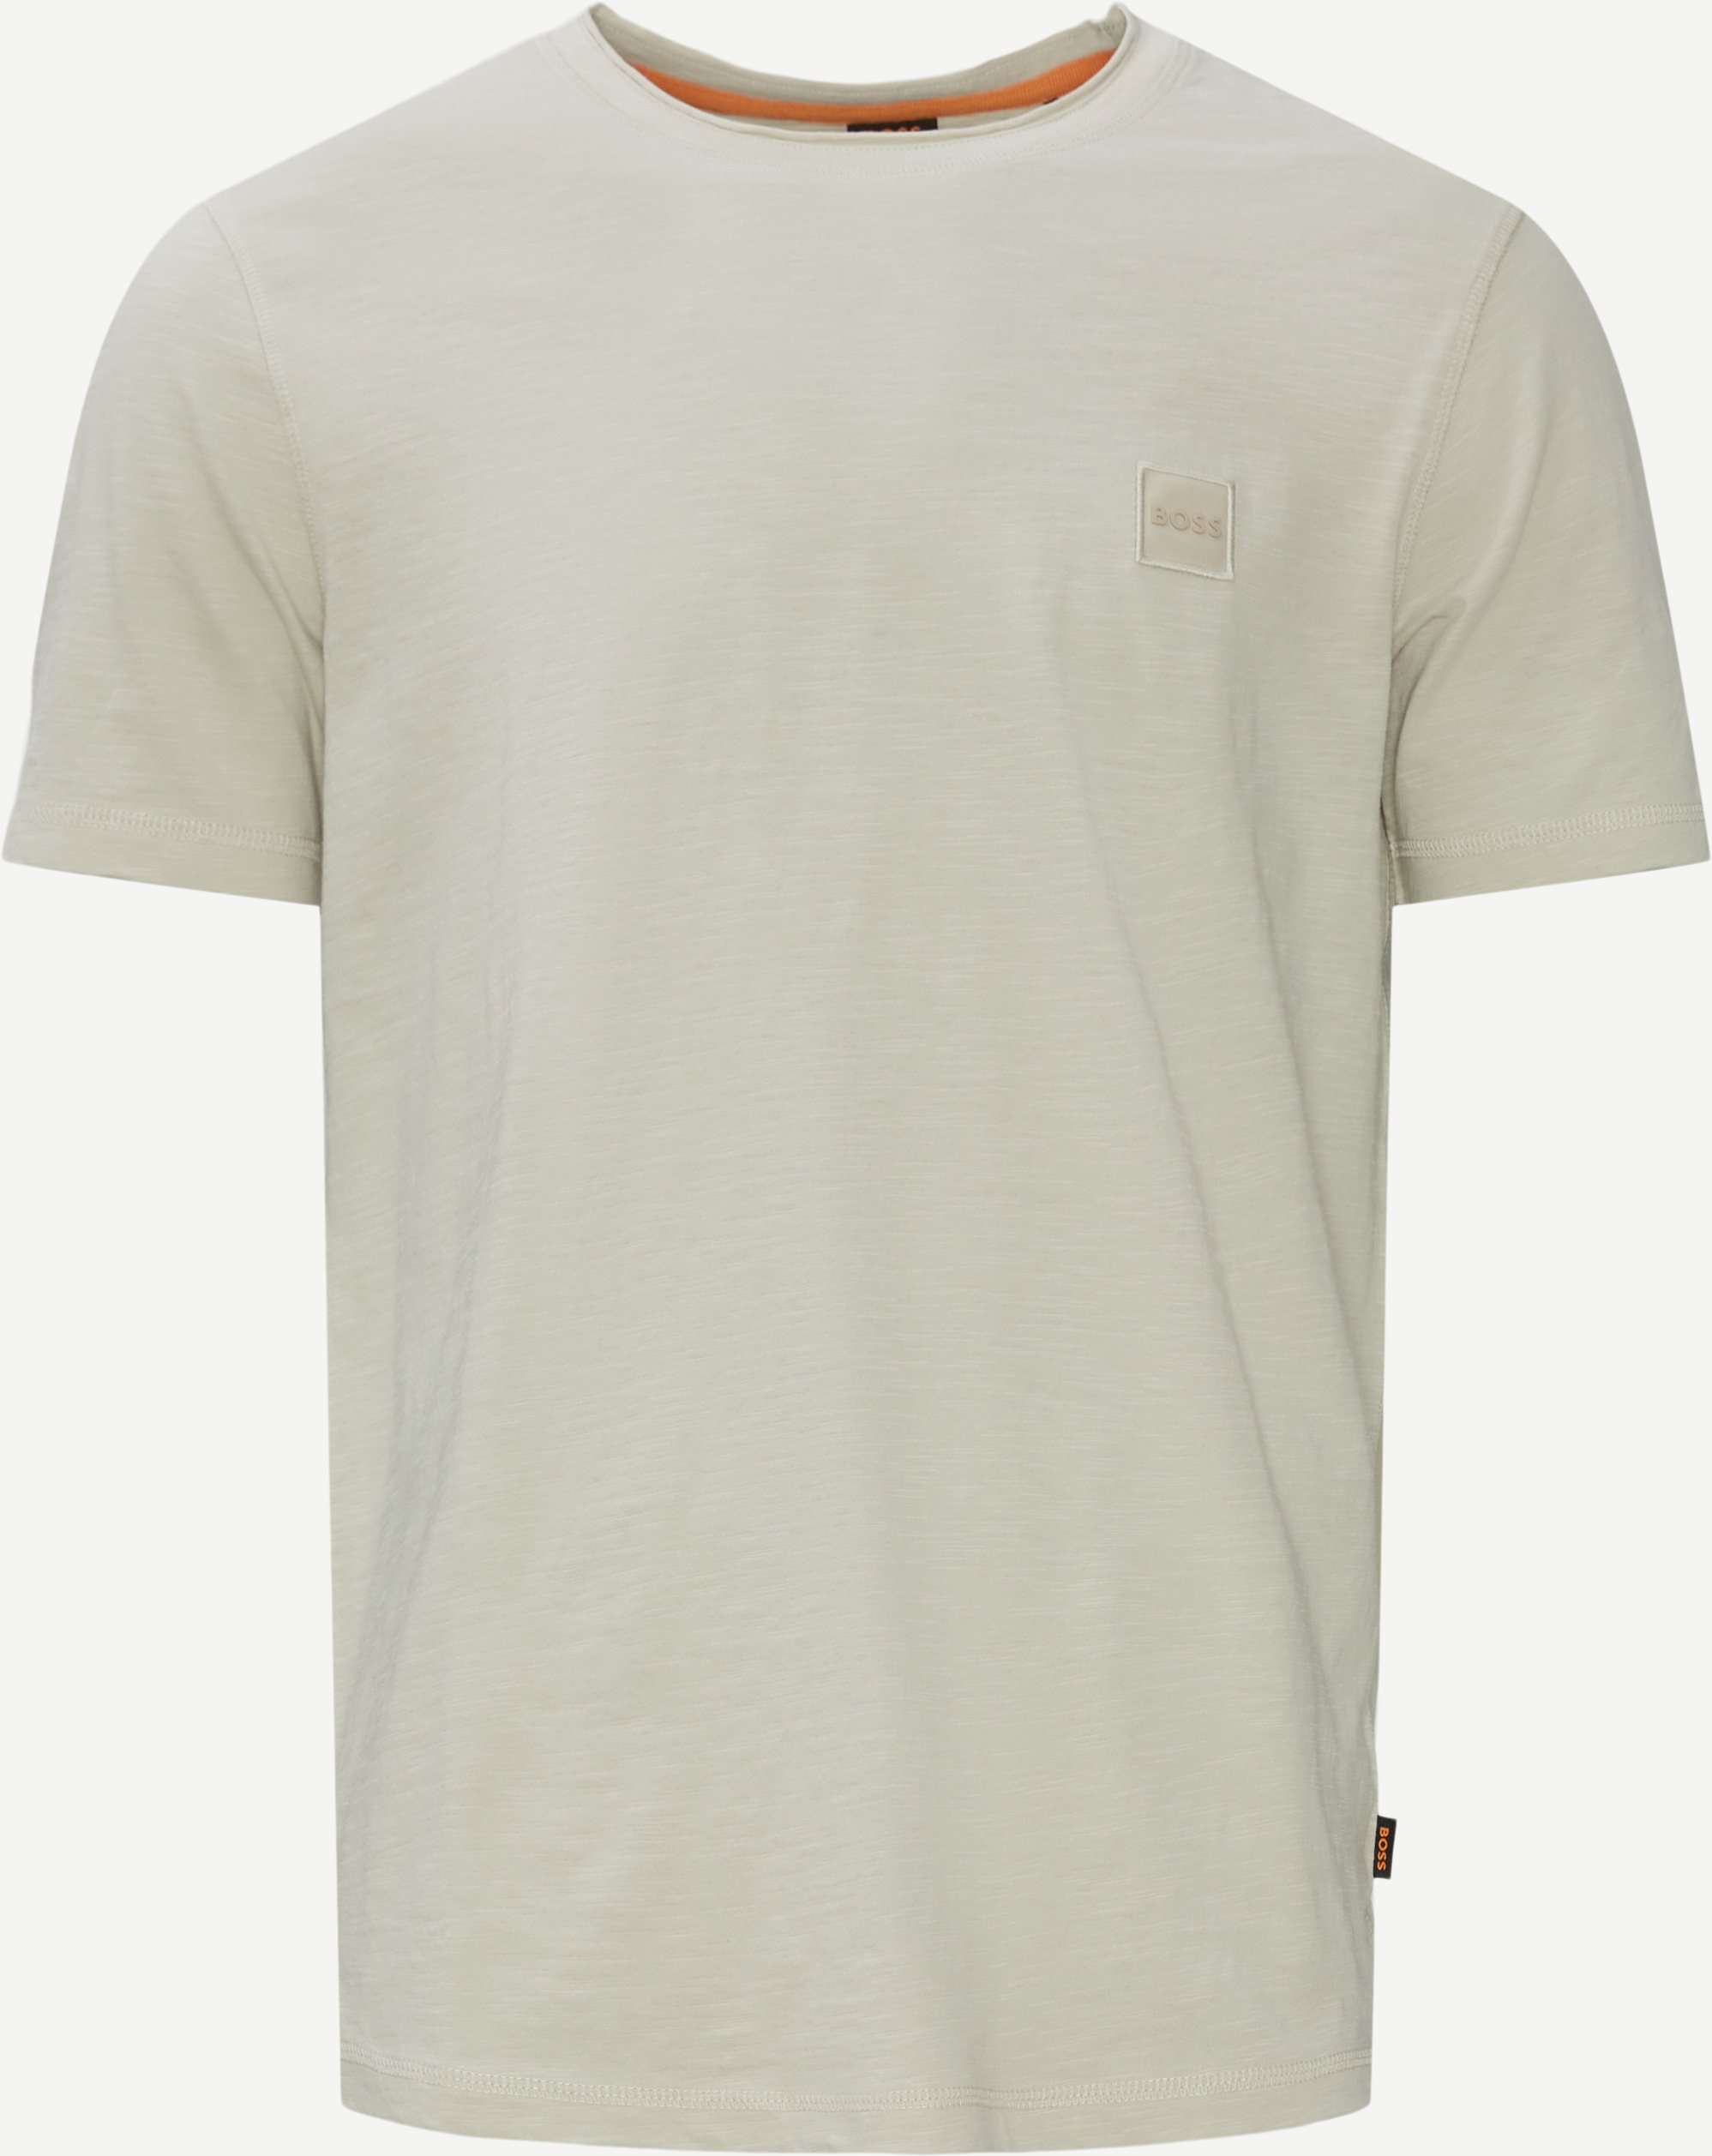 Tegood T-shirt - T-shirts - Regular fit - Sand